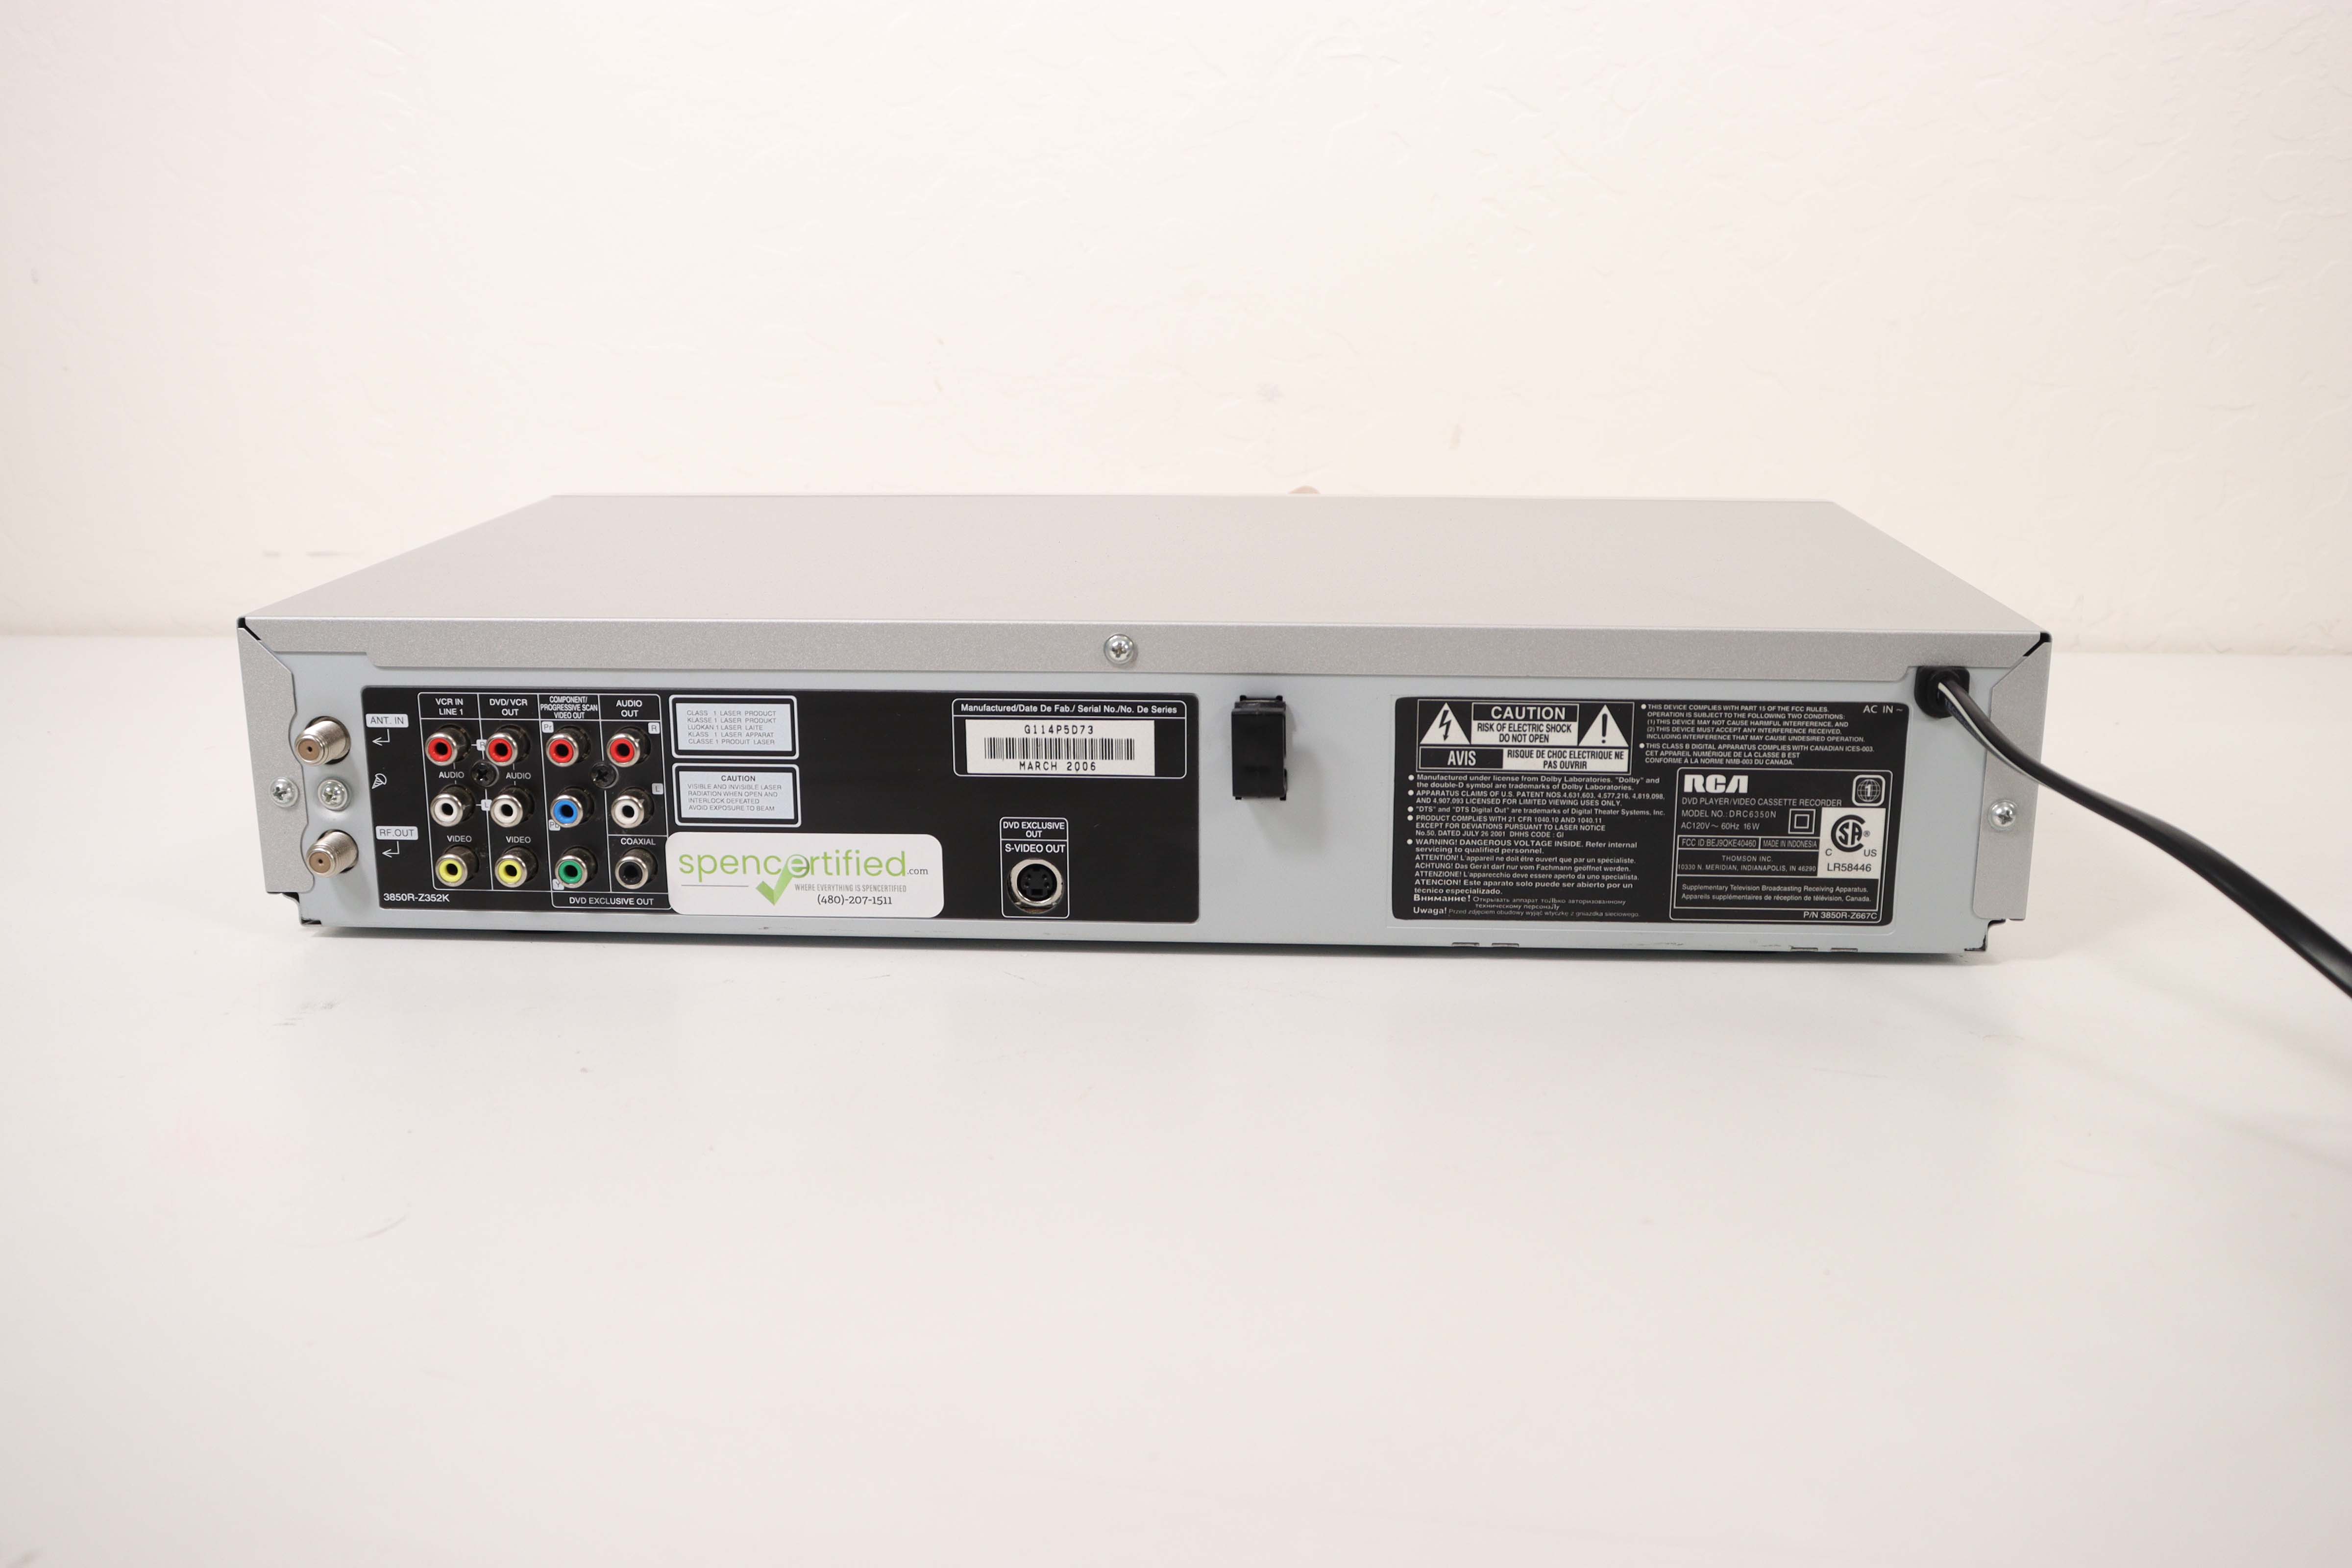 Nuevo en caja Califone DvdvcrR-200 DVD VCR Combo Reproductor de